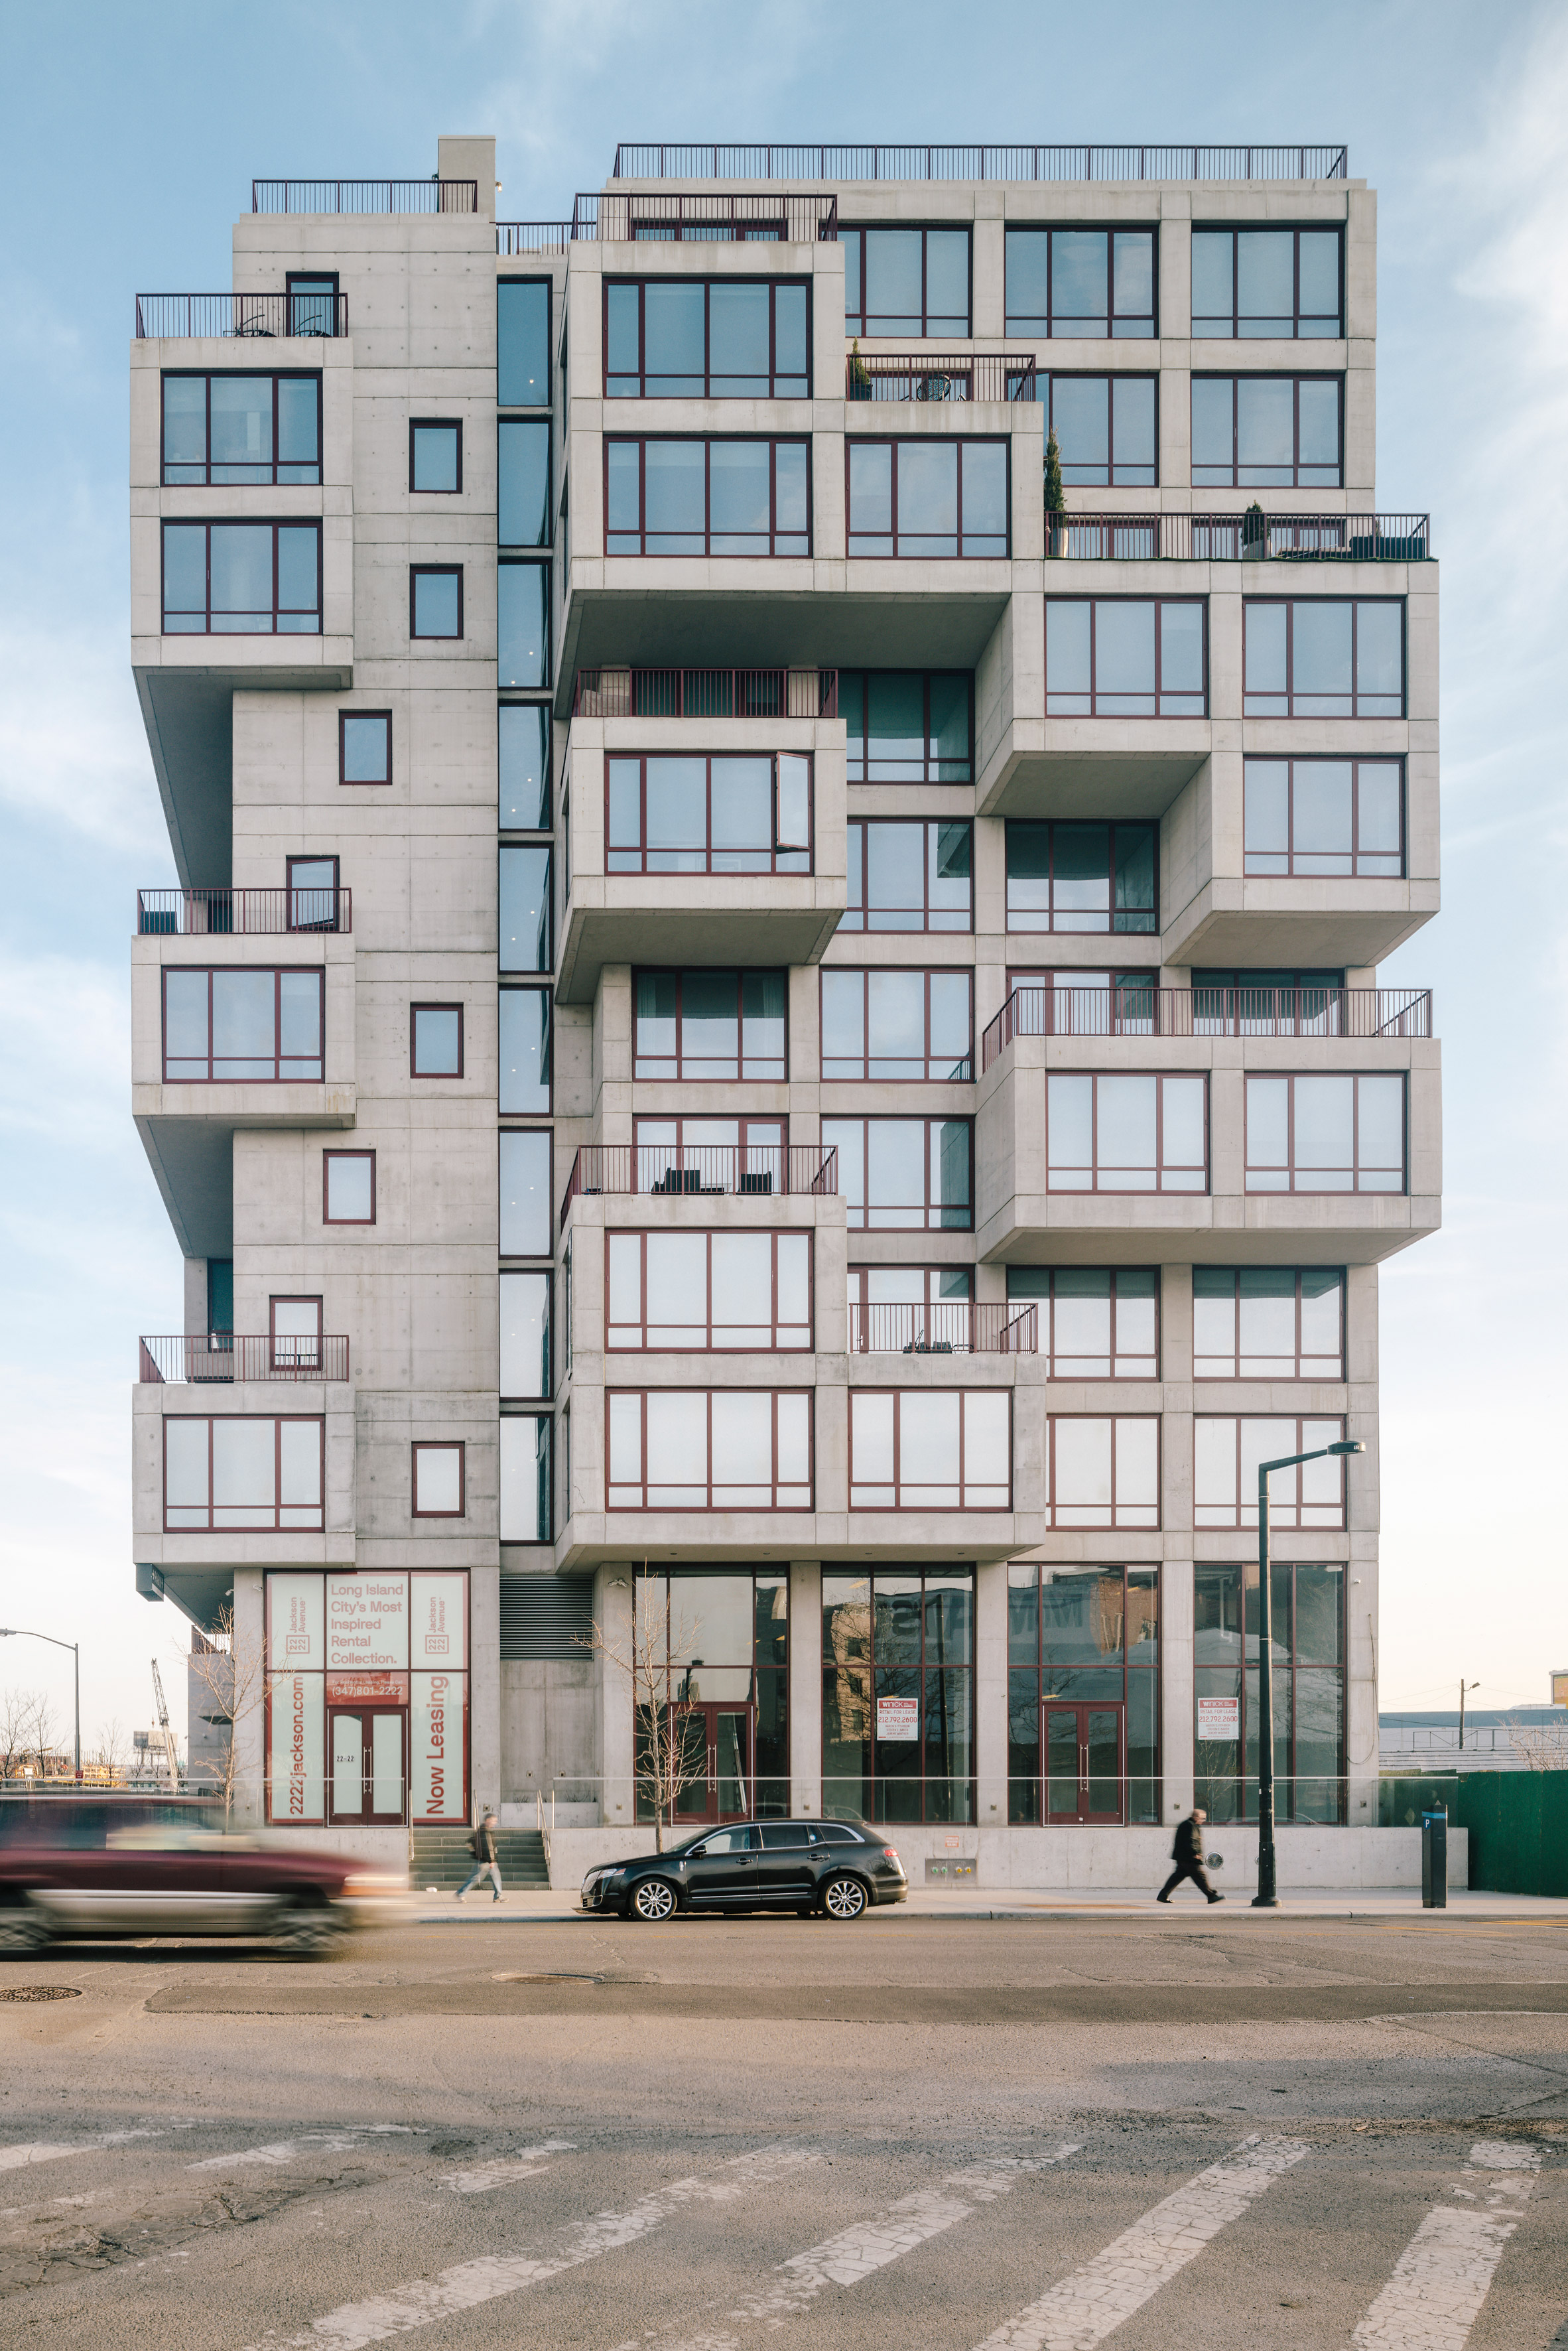 ODA completes "pixelated" luxury condo building in Queens